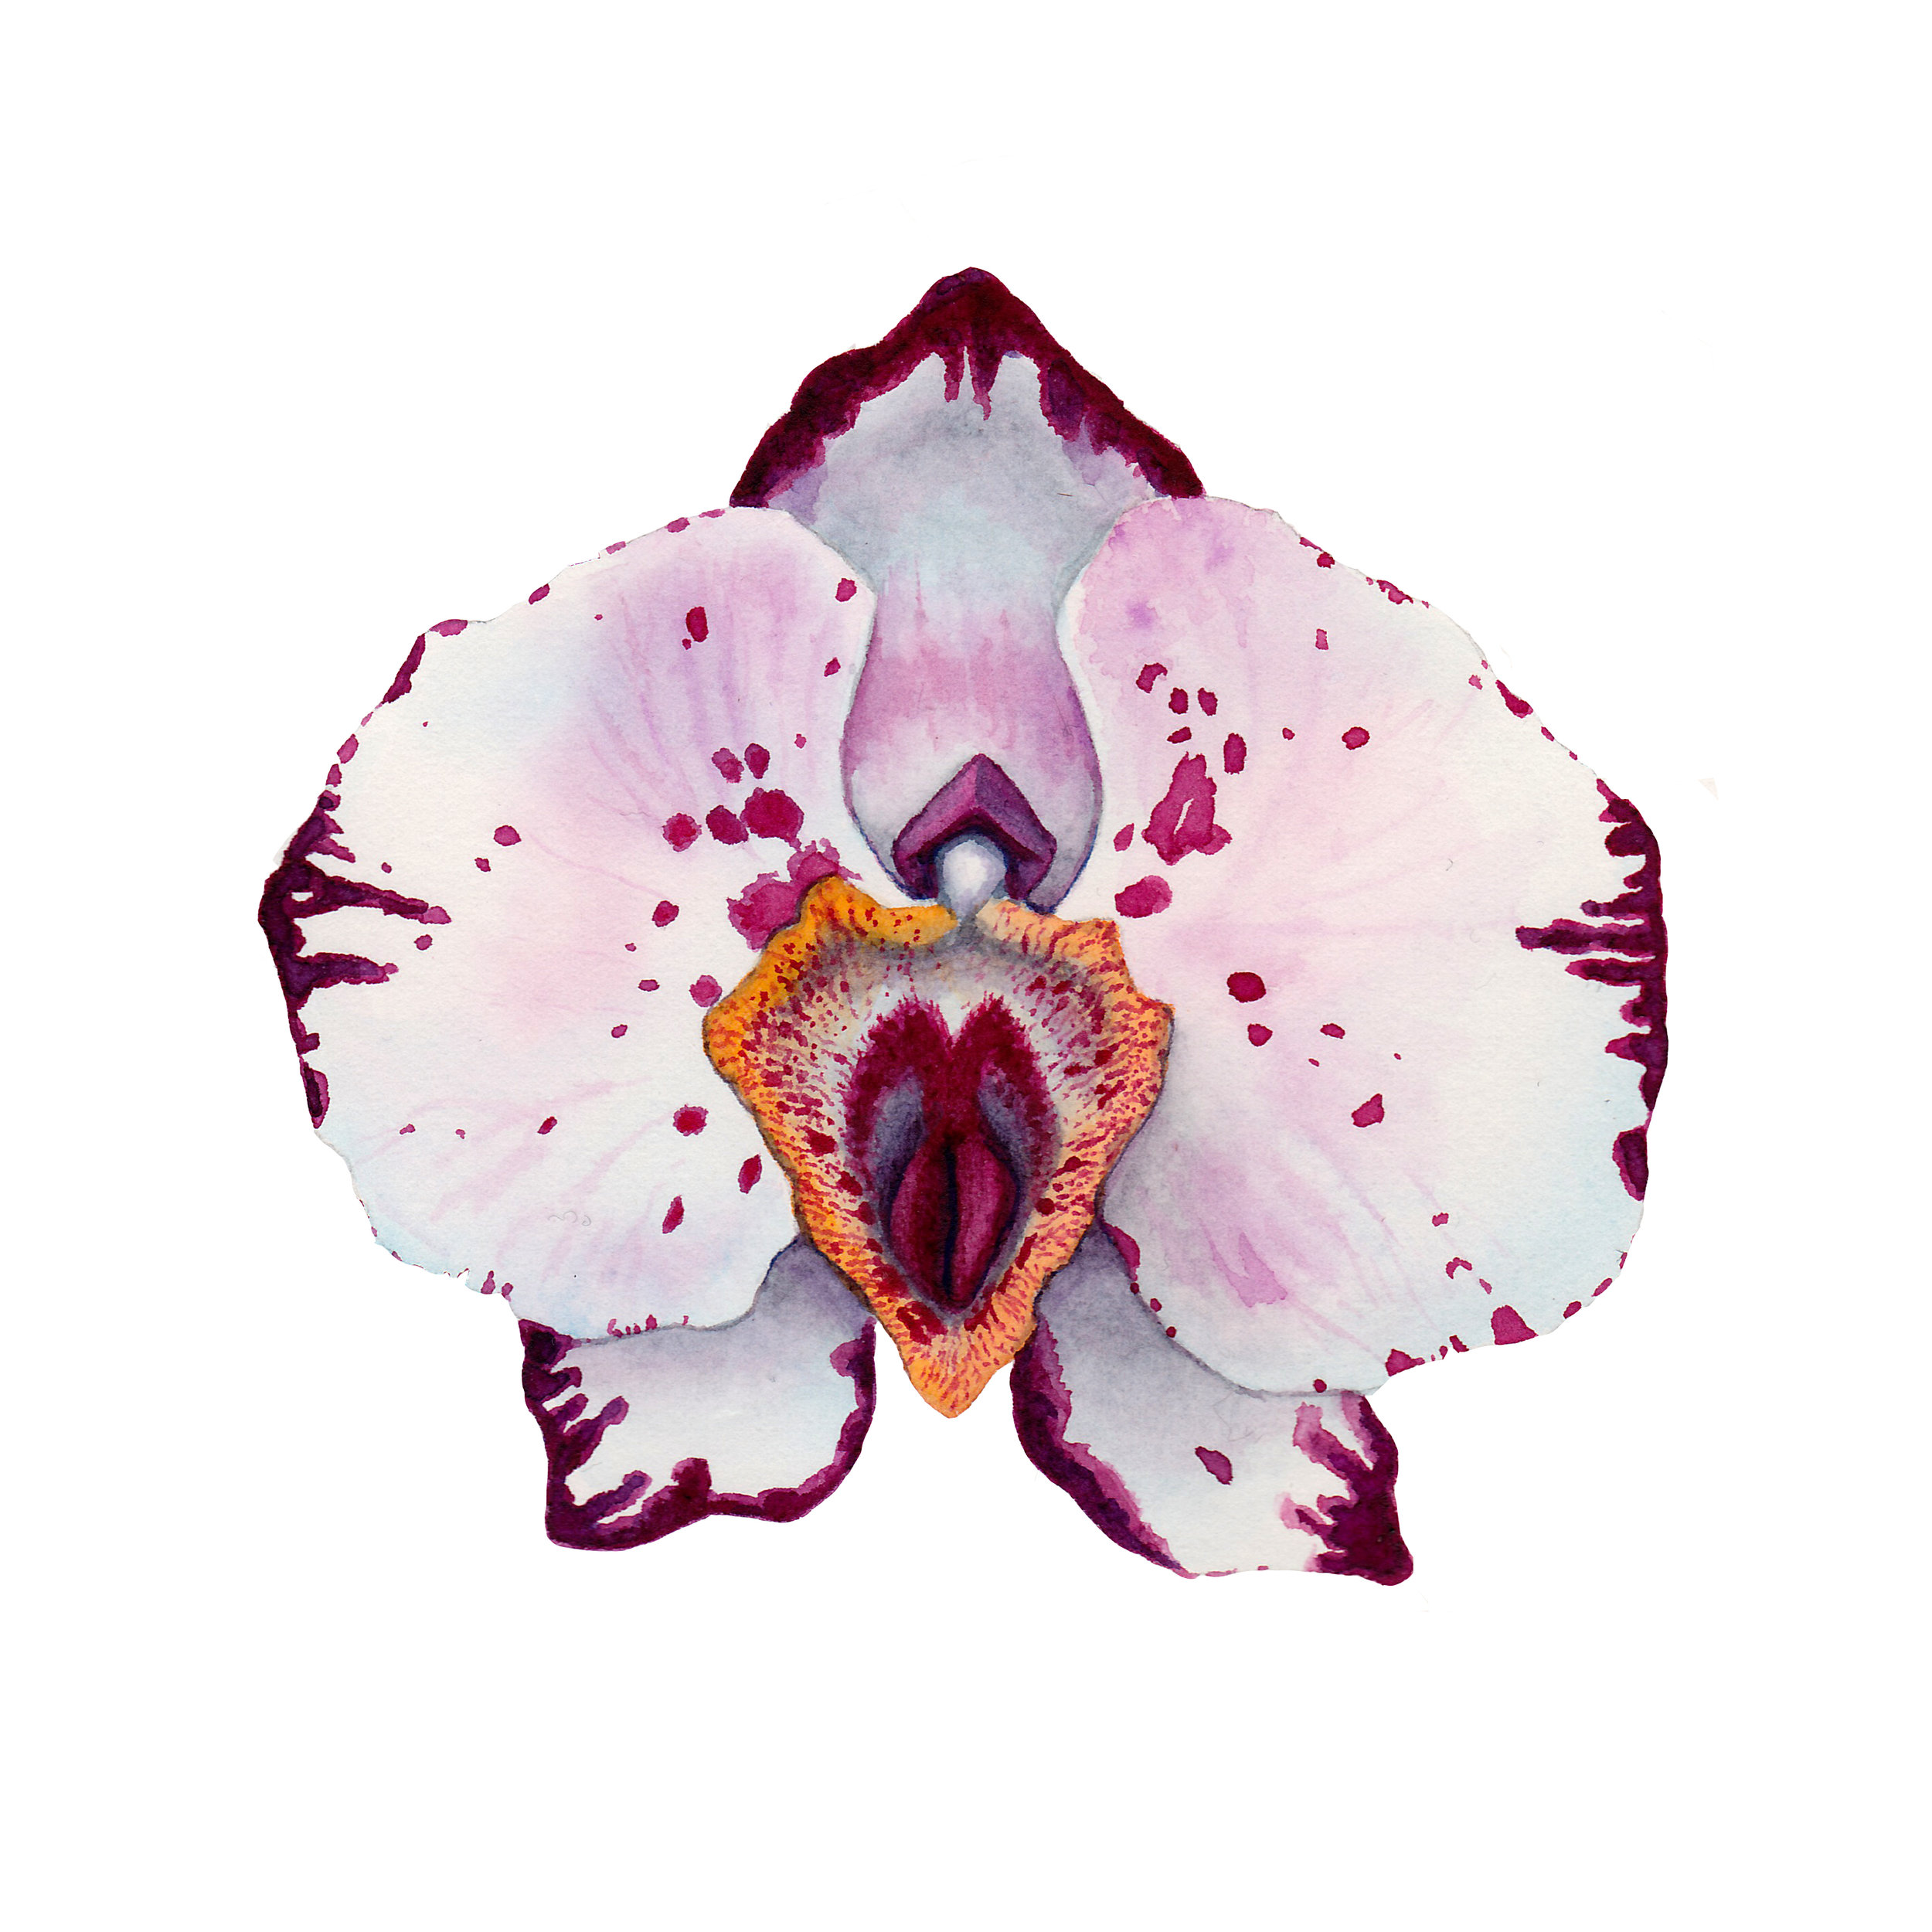 instagramorchidpussyflower.jpg